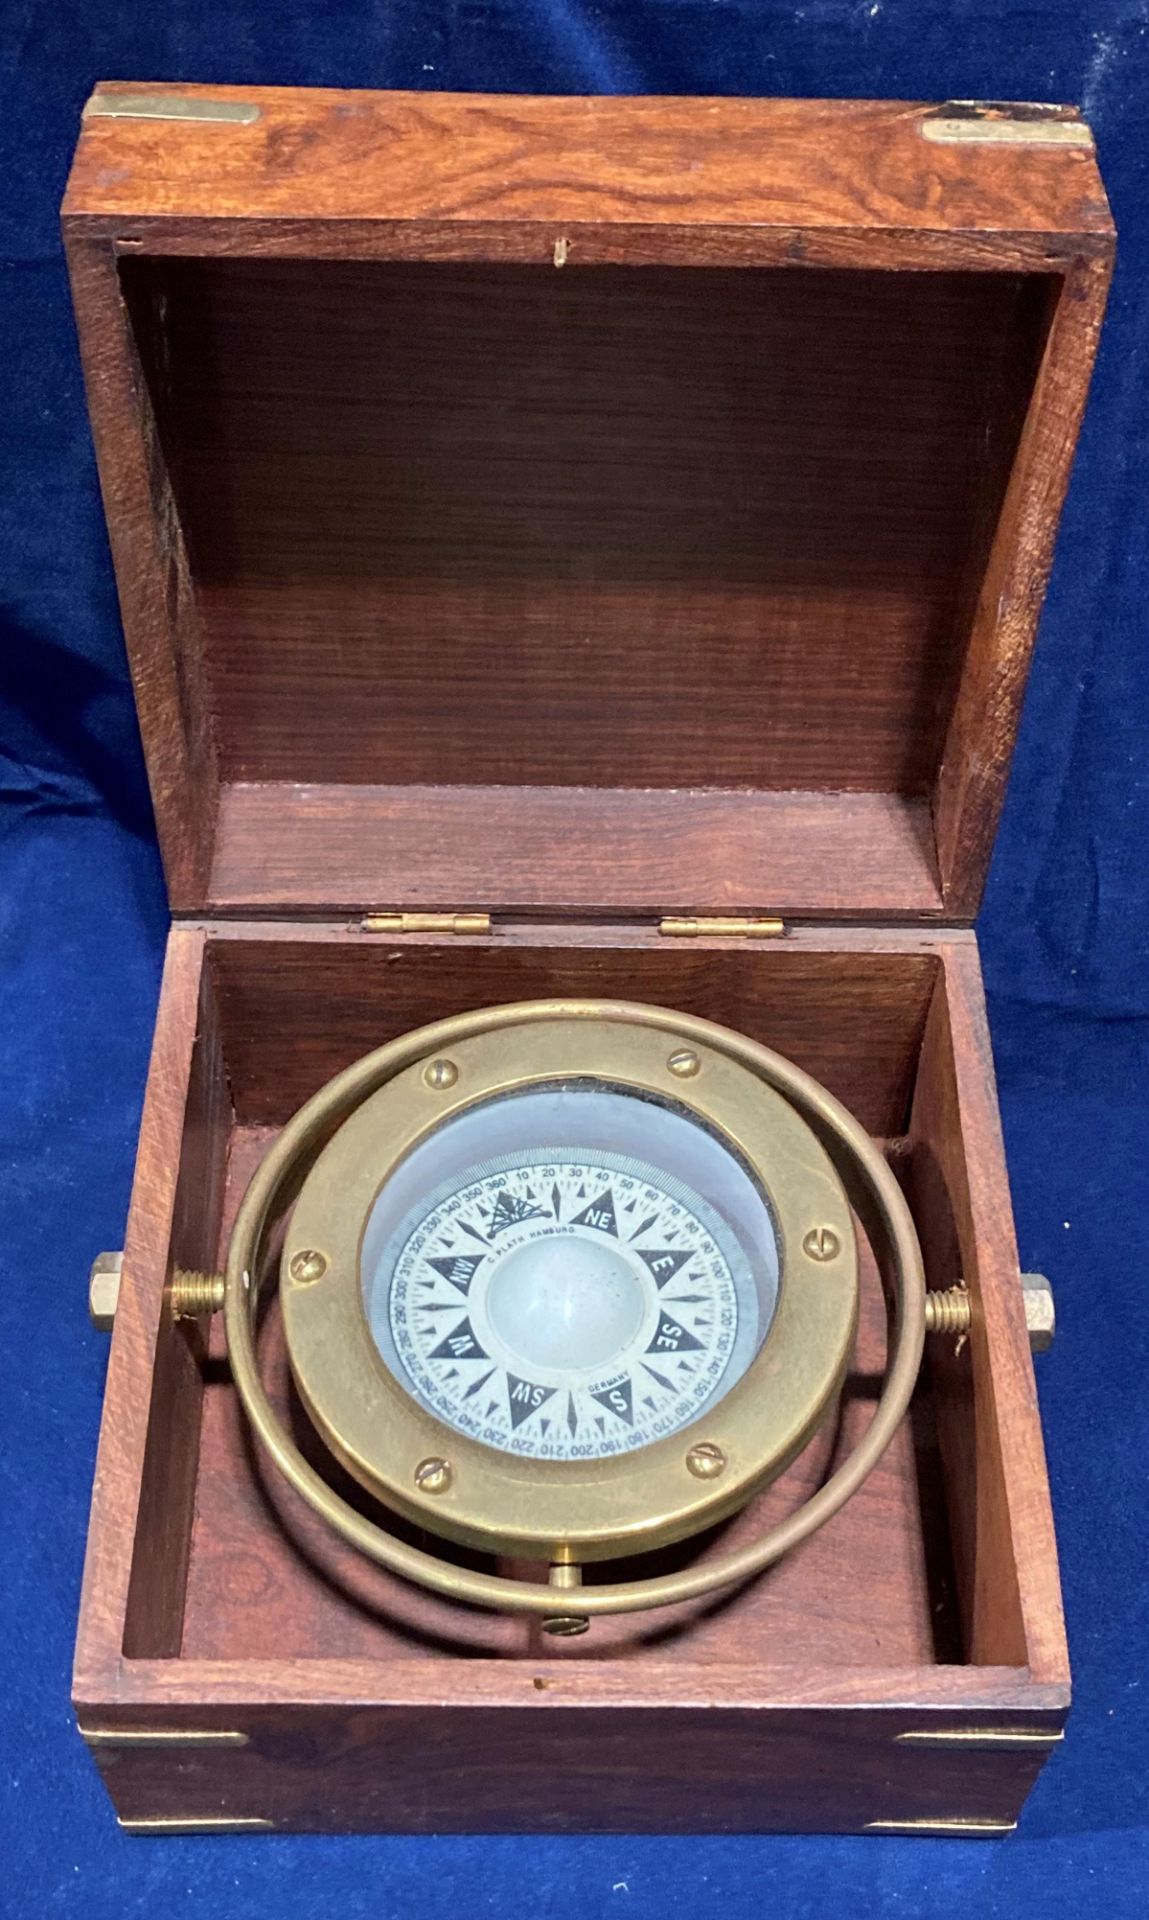 C Plath Hamburg Germany brass compass in walnut case (Saleroom location: S2 counter 3)